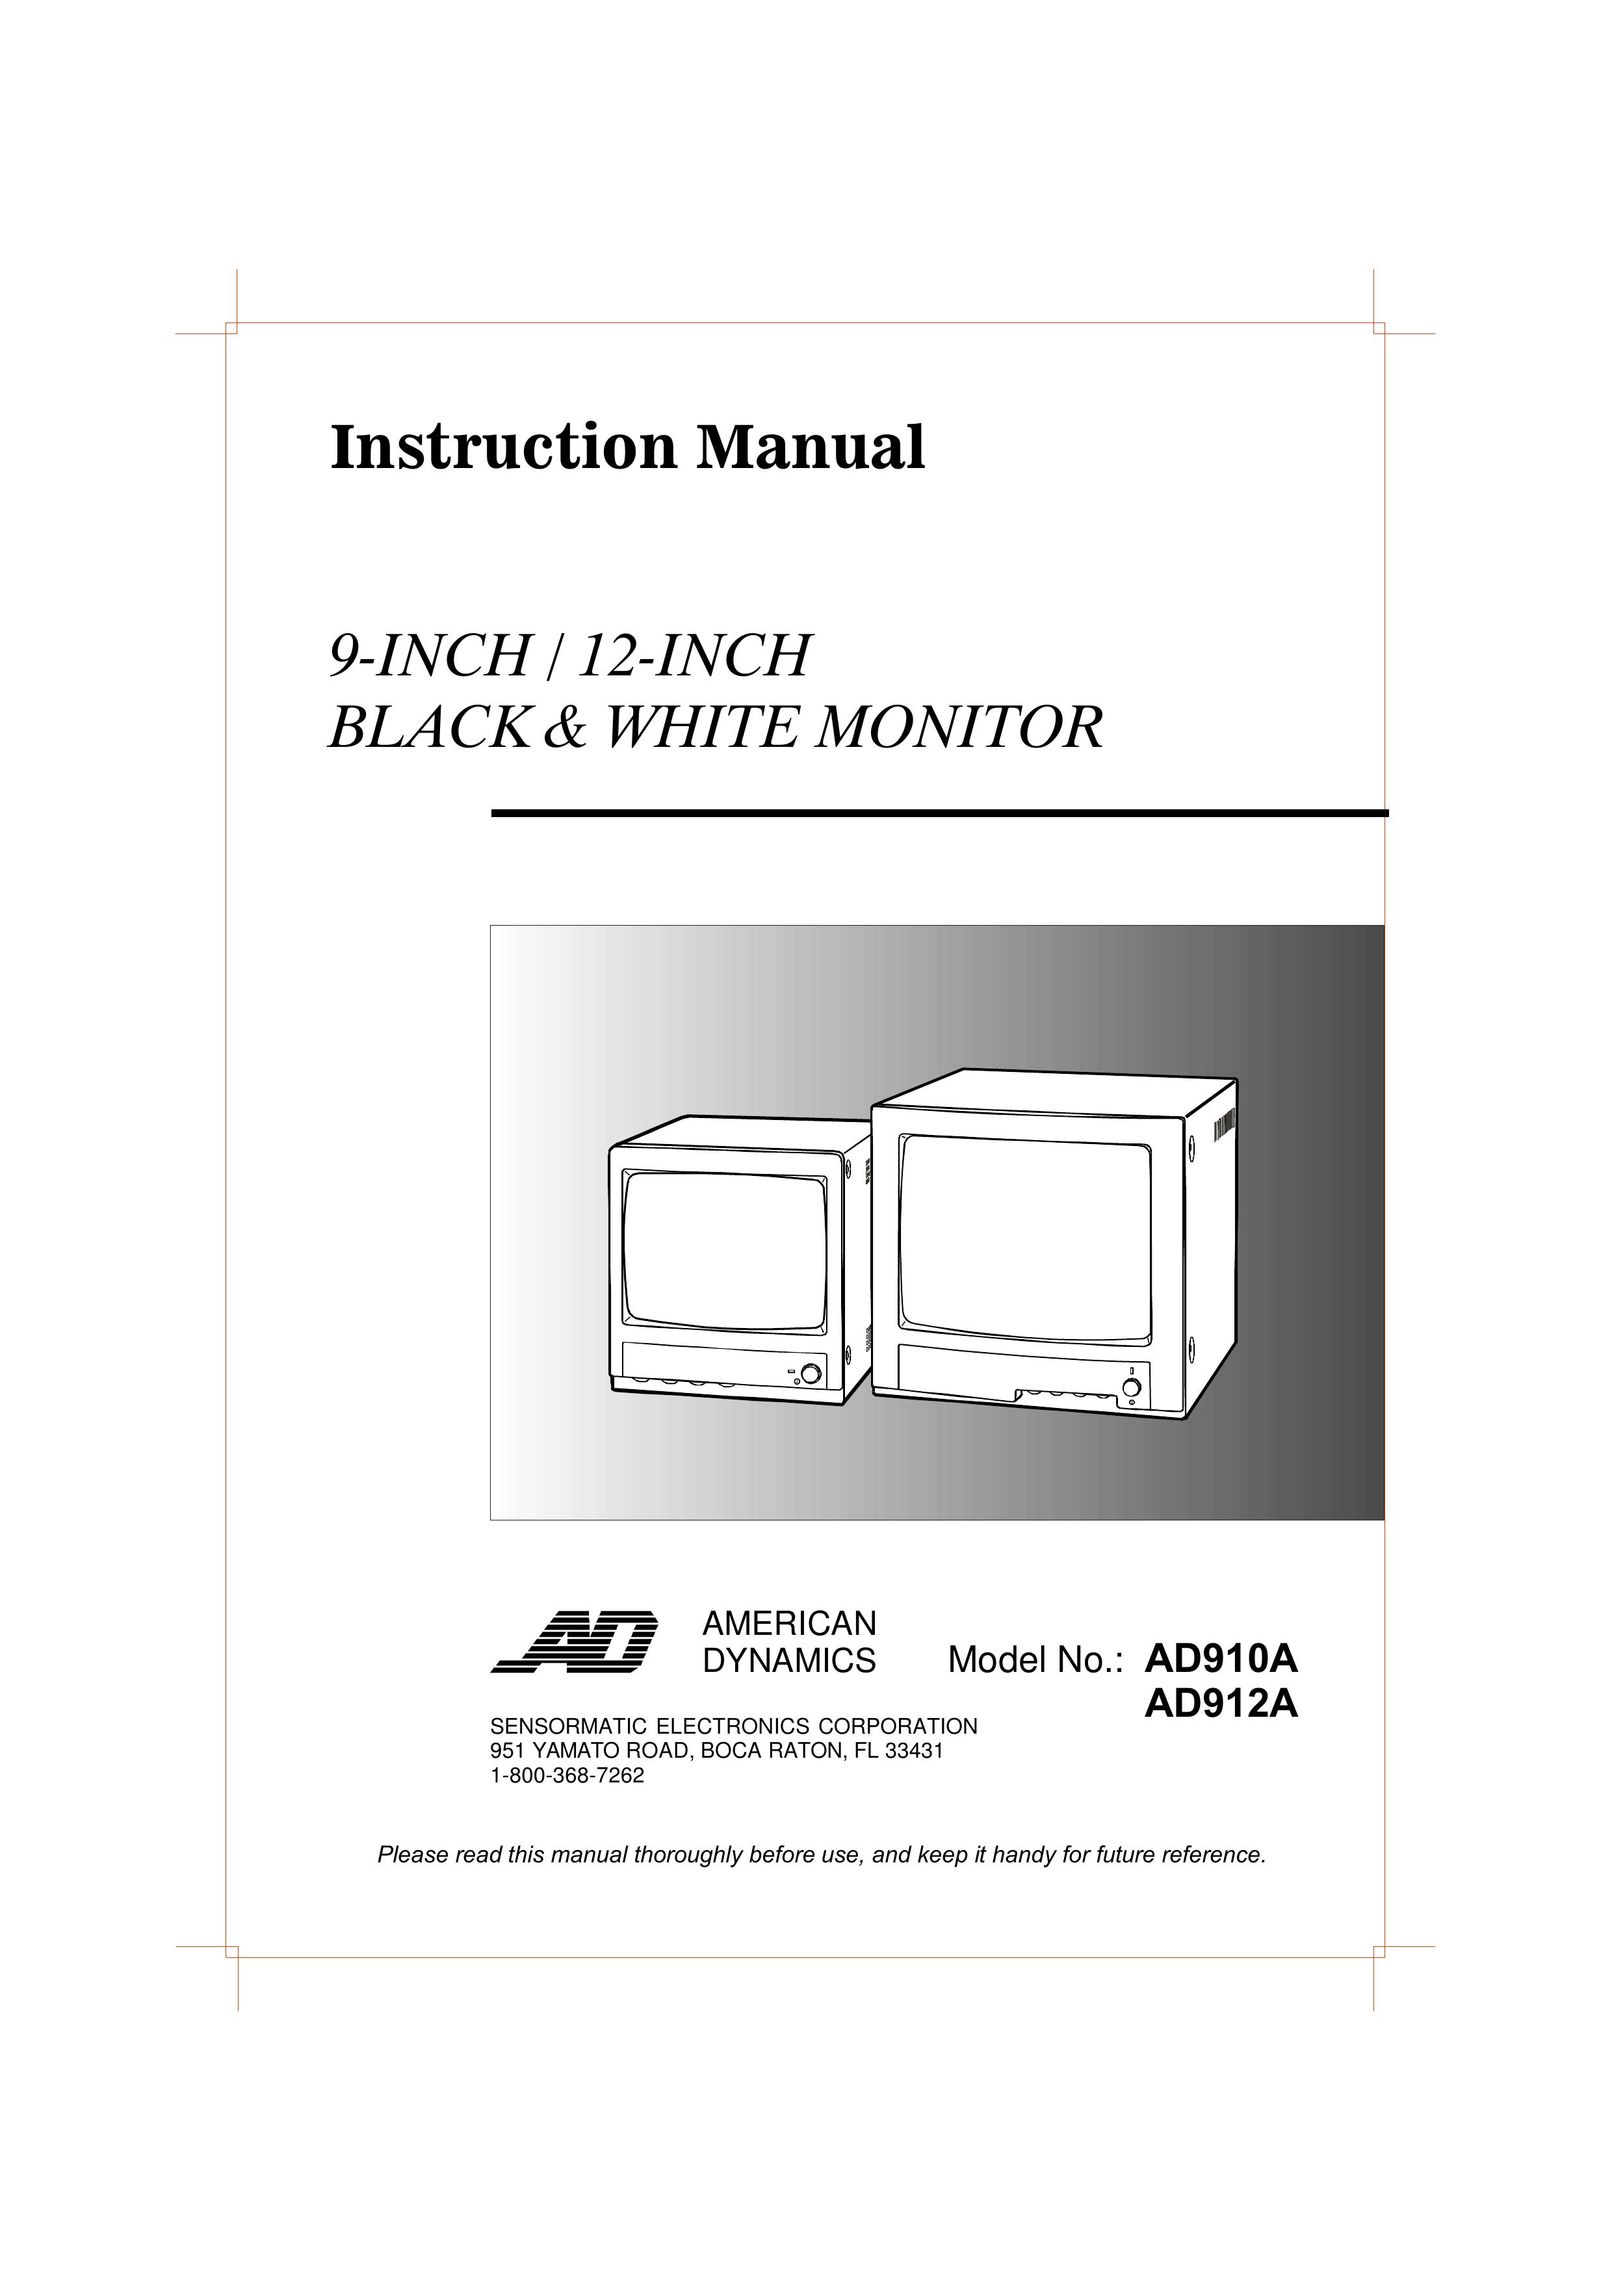 American Dynamics AD912A Computer Monitor User Manual